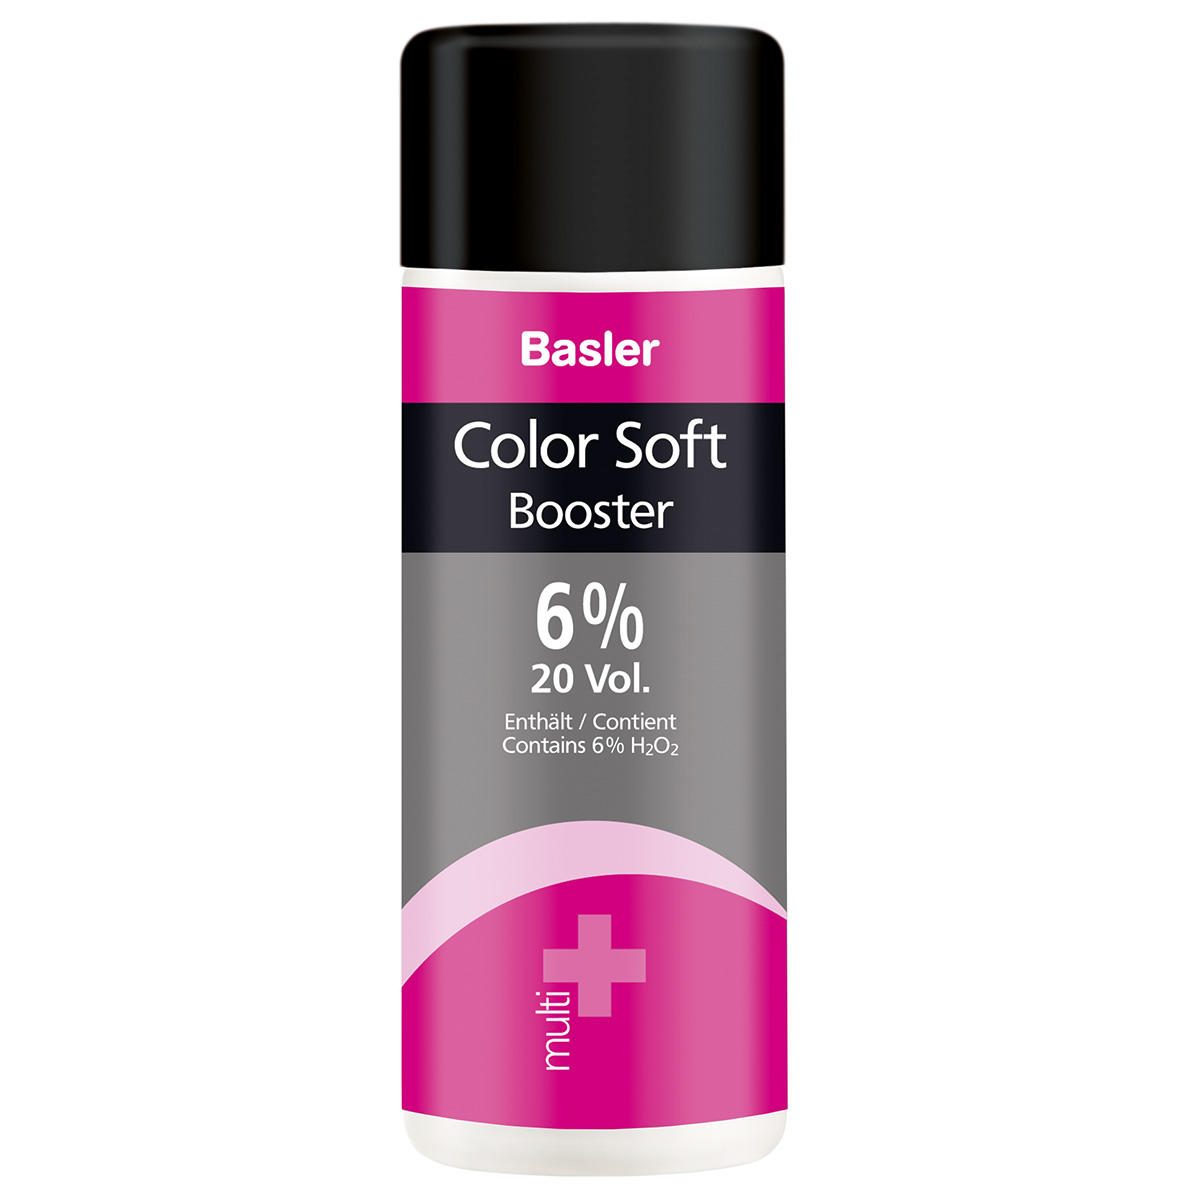 Basler Color Soft multi Booster 6 % - 20 Vol., Flasche 200 ml - 1